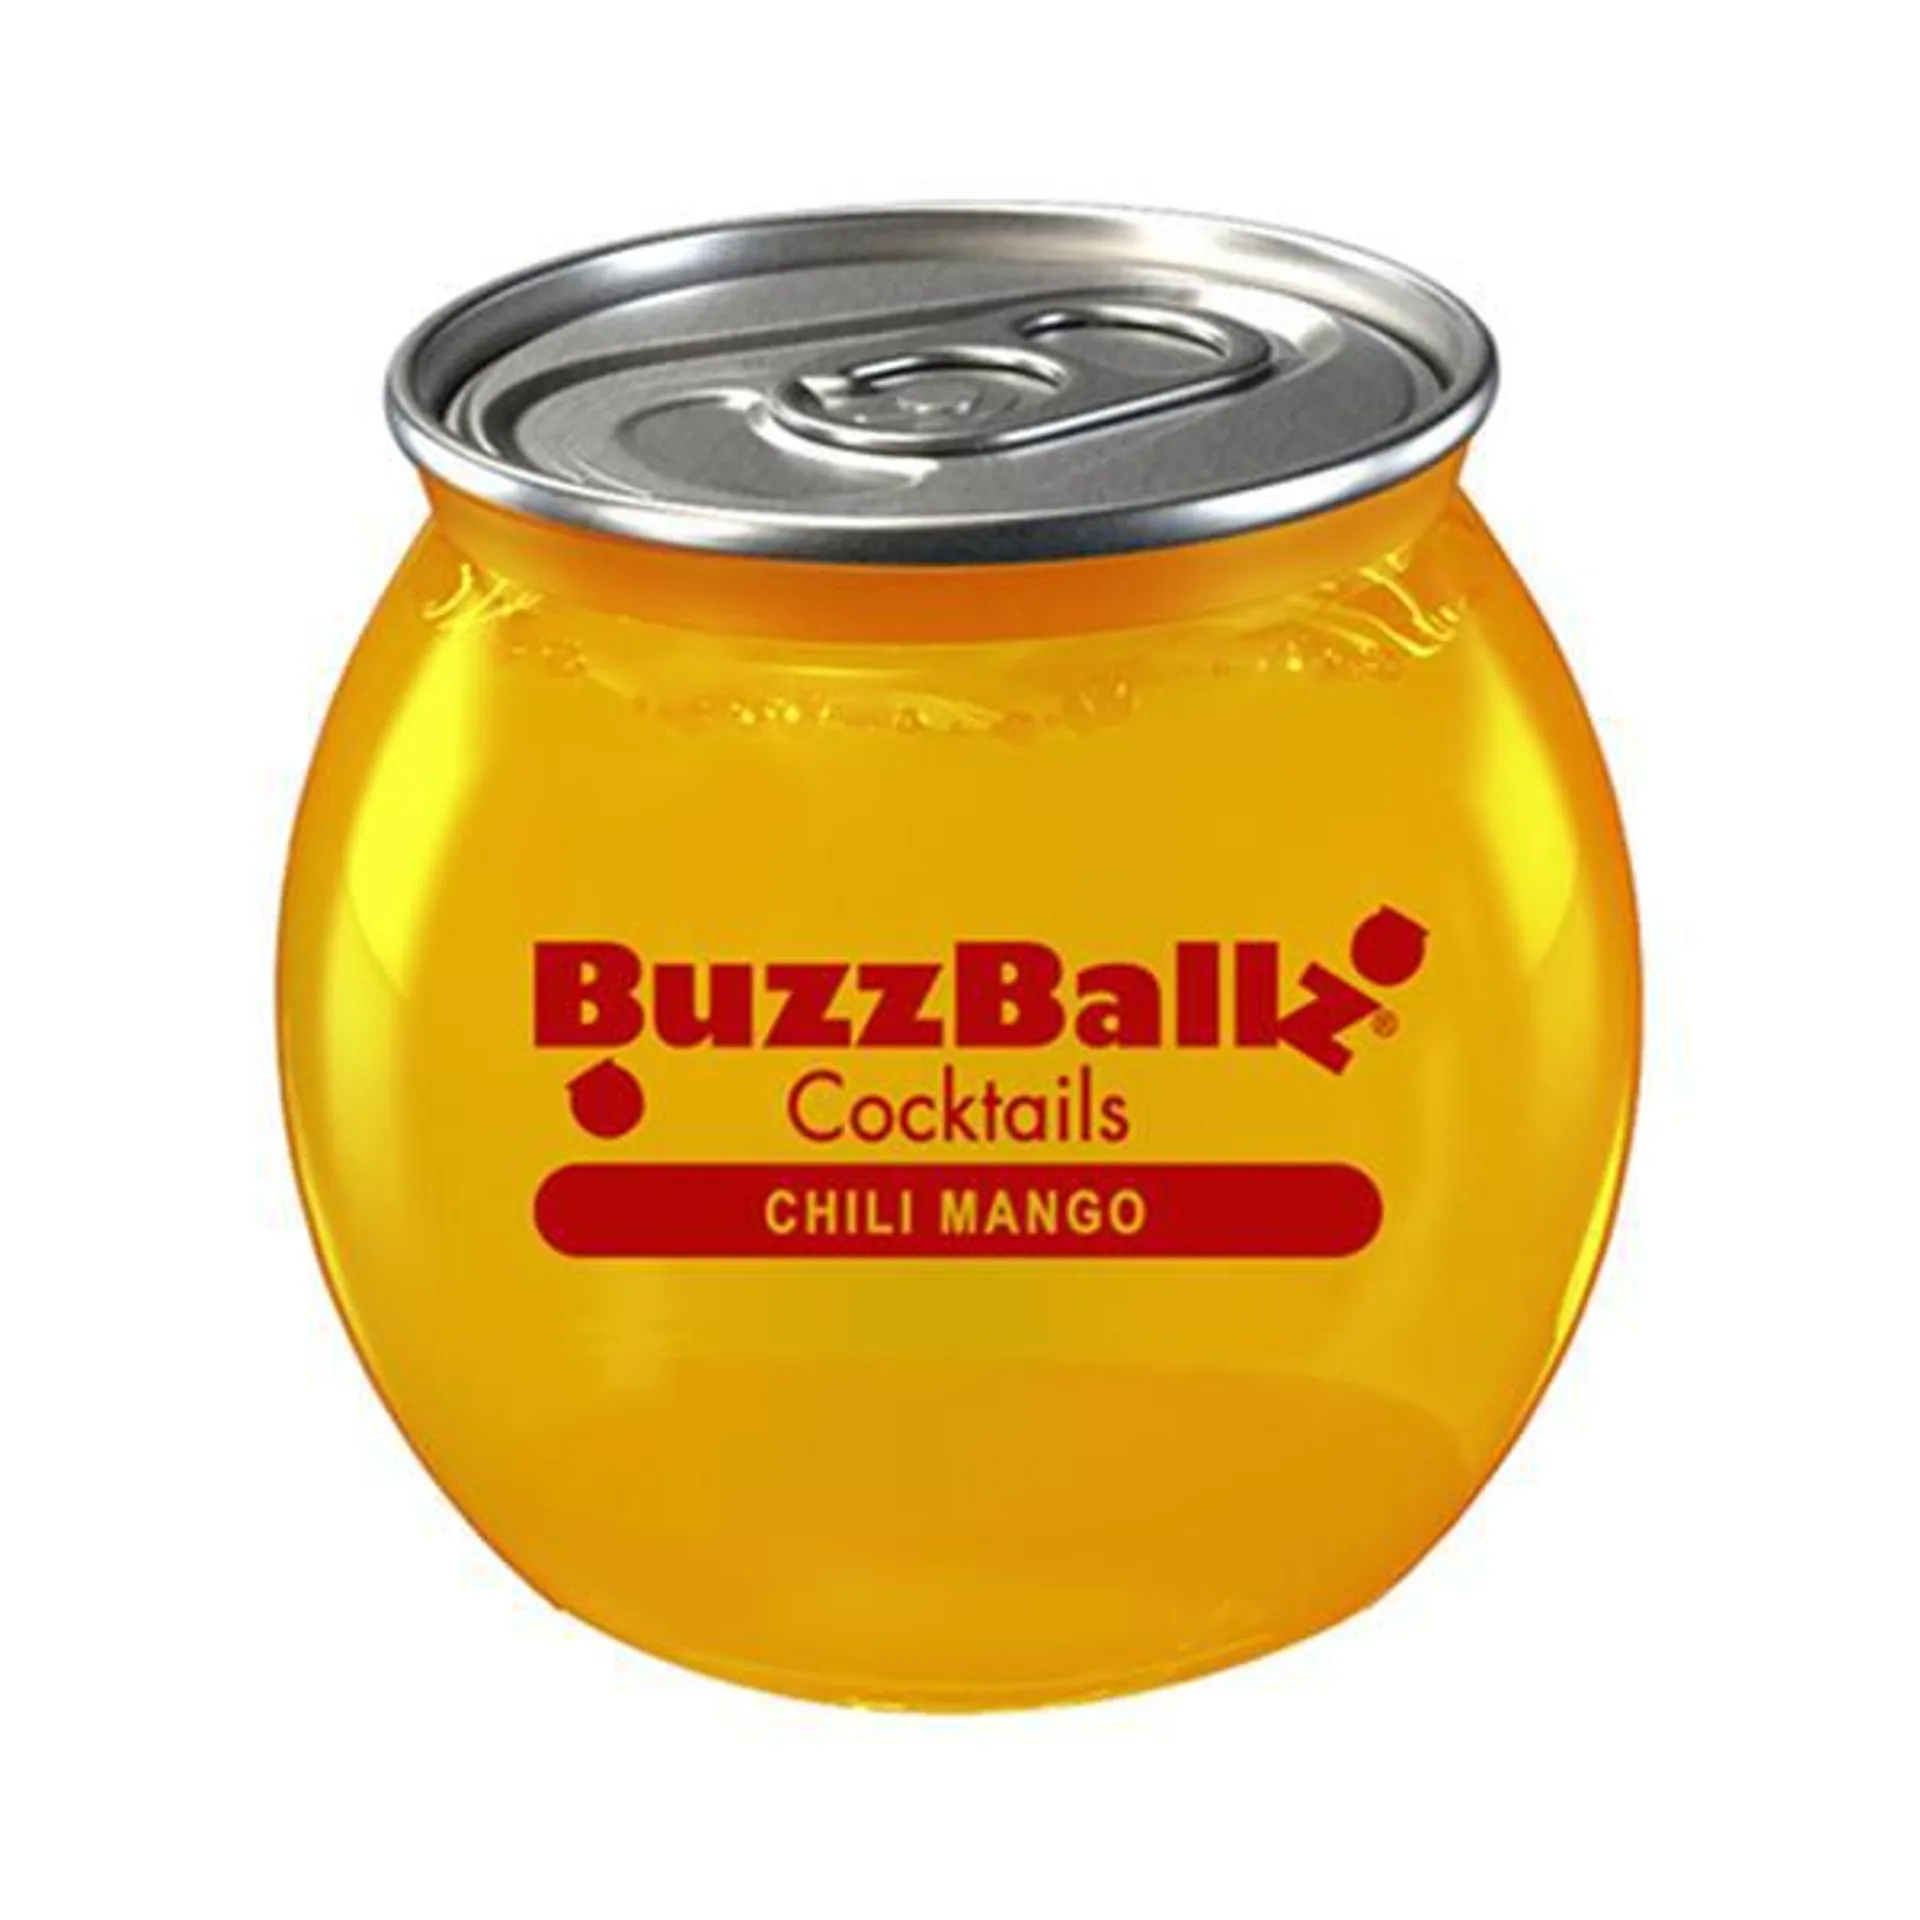 Buzz Ballz Cocktails Chili Mango 200ml